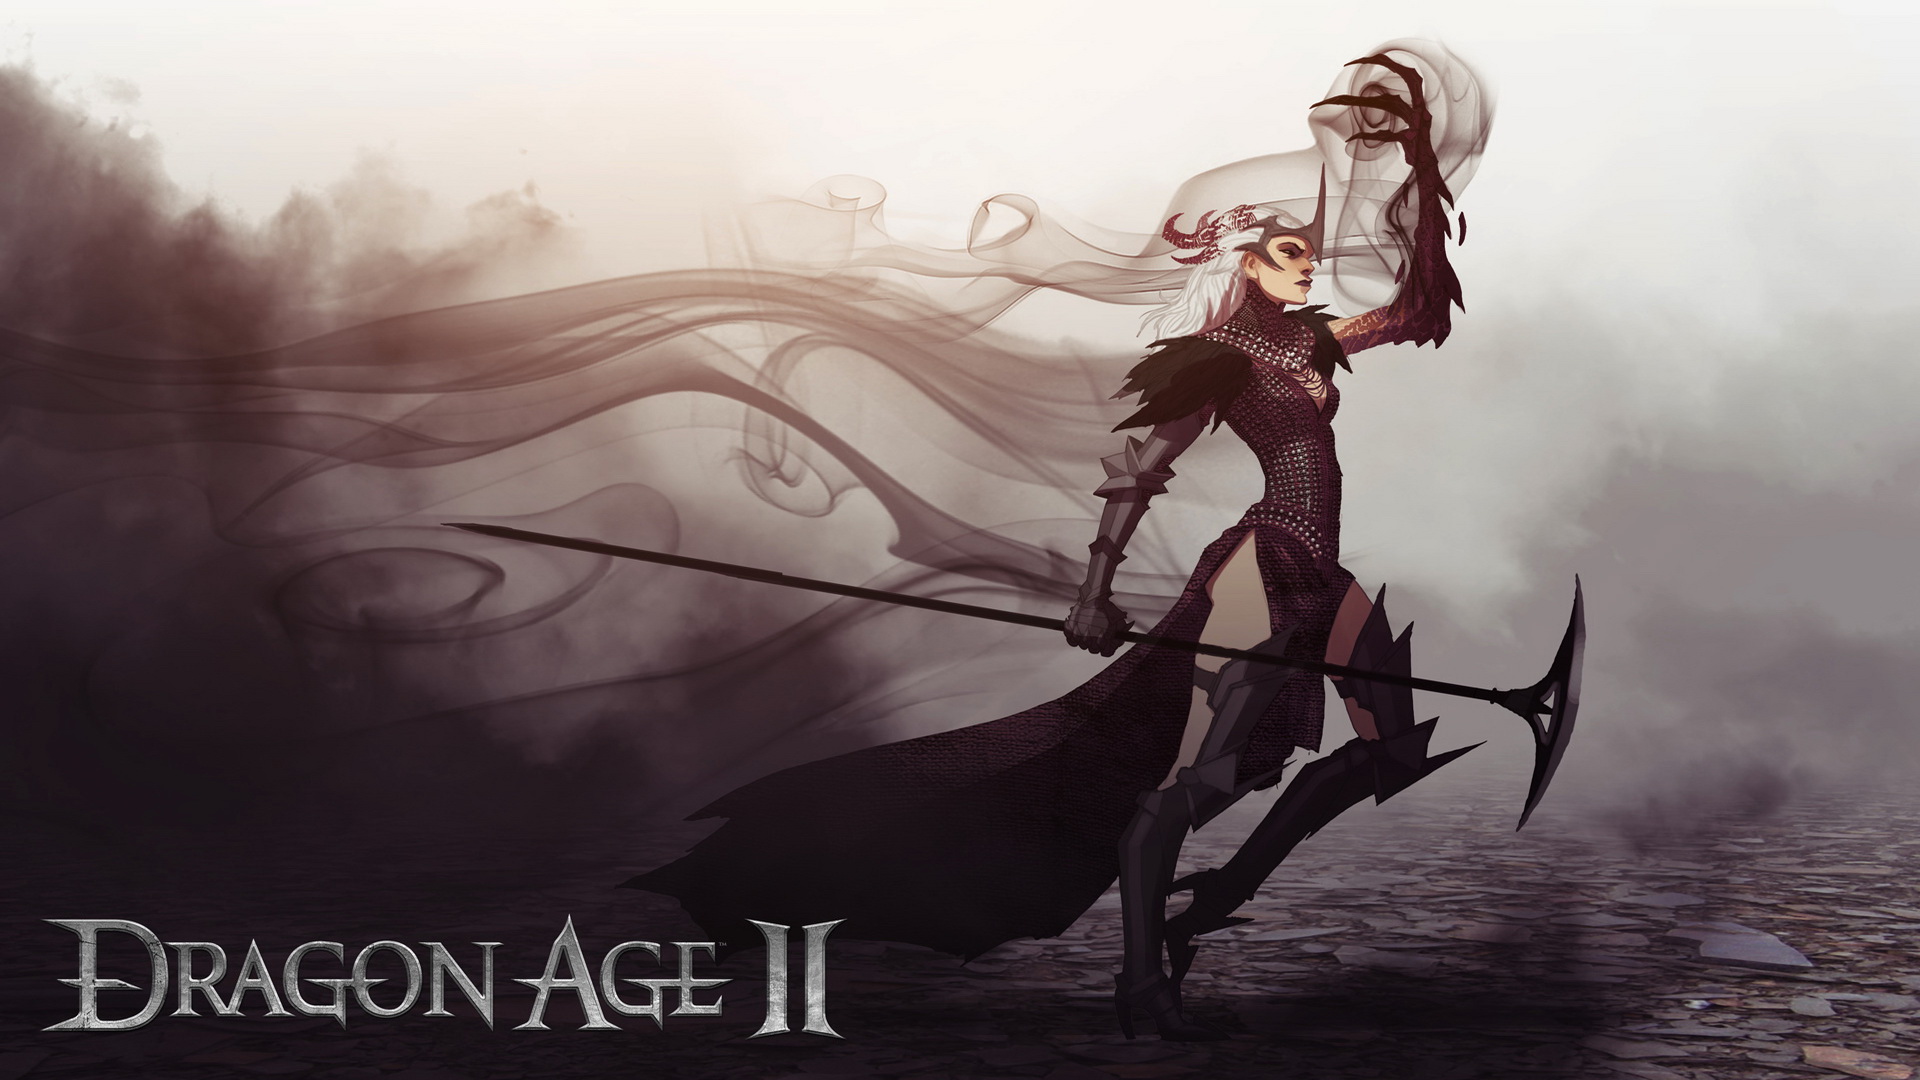 Dragon Age Ii Concept Art Wallpaper Game HD Video Games